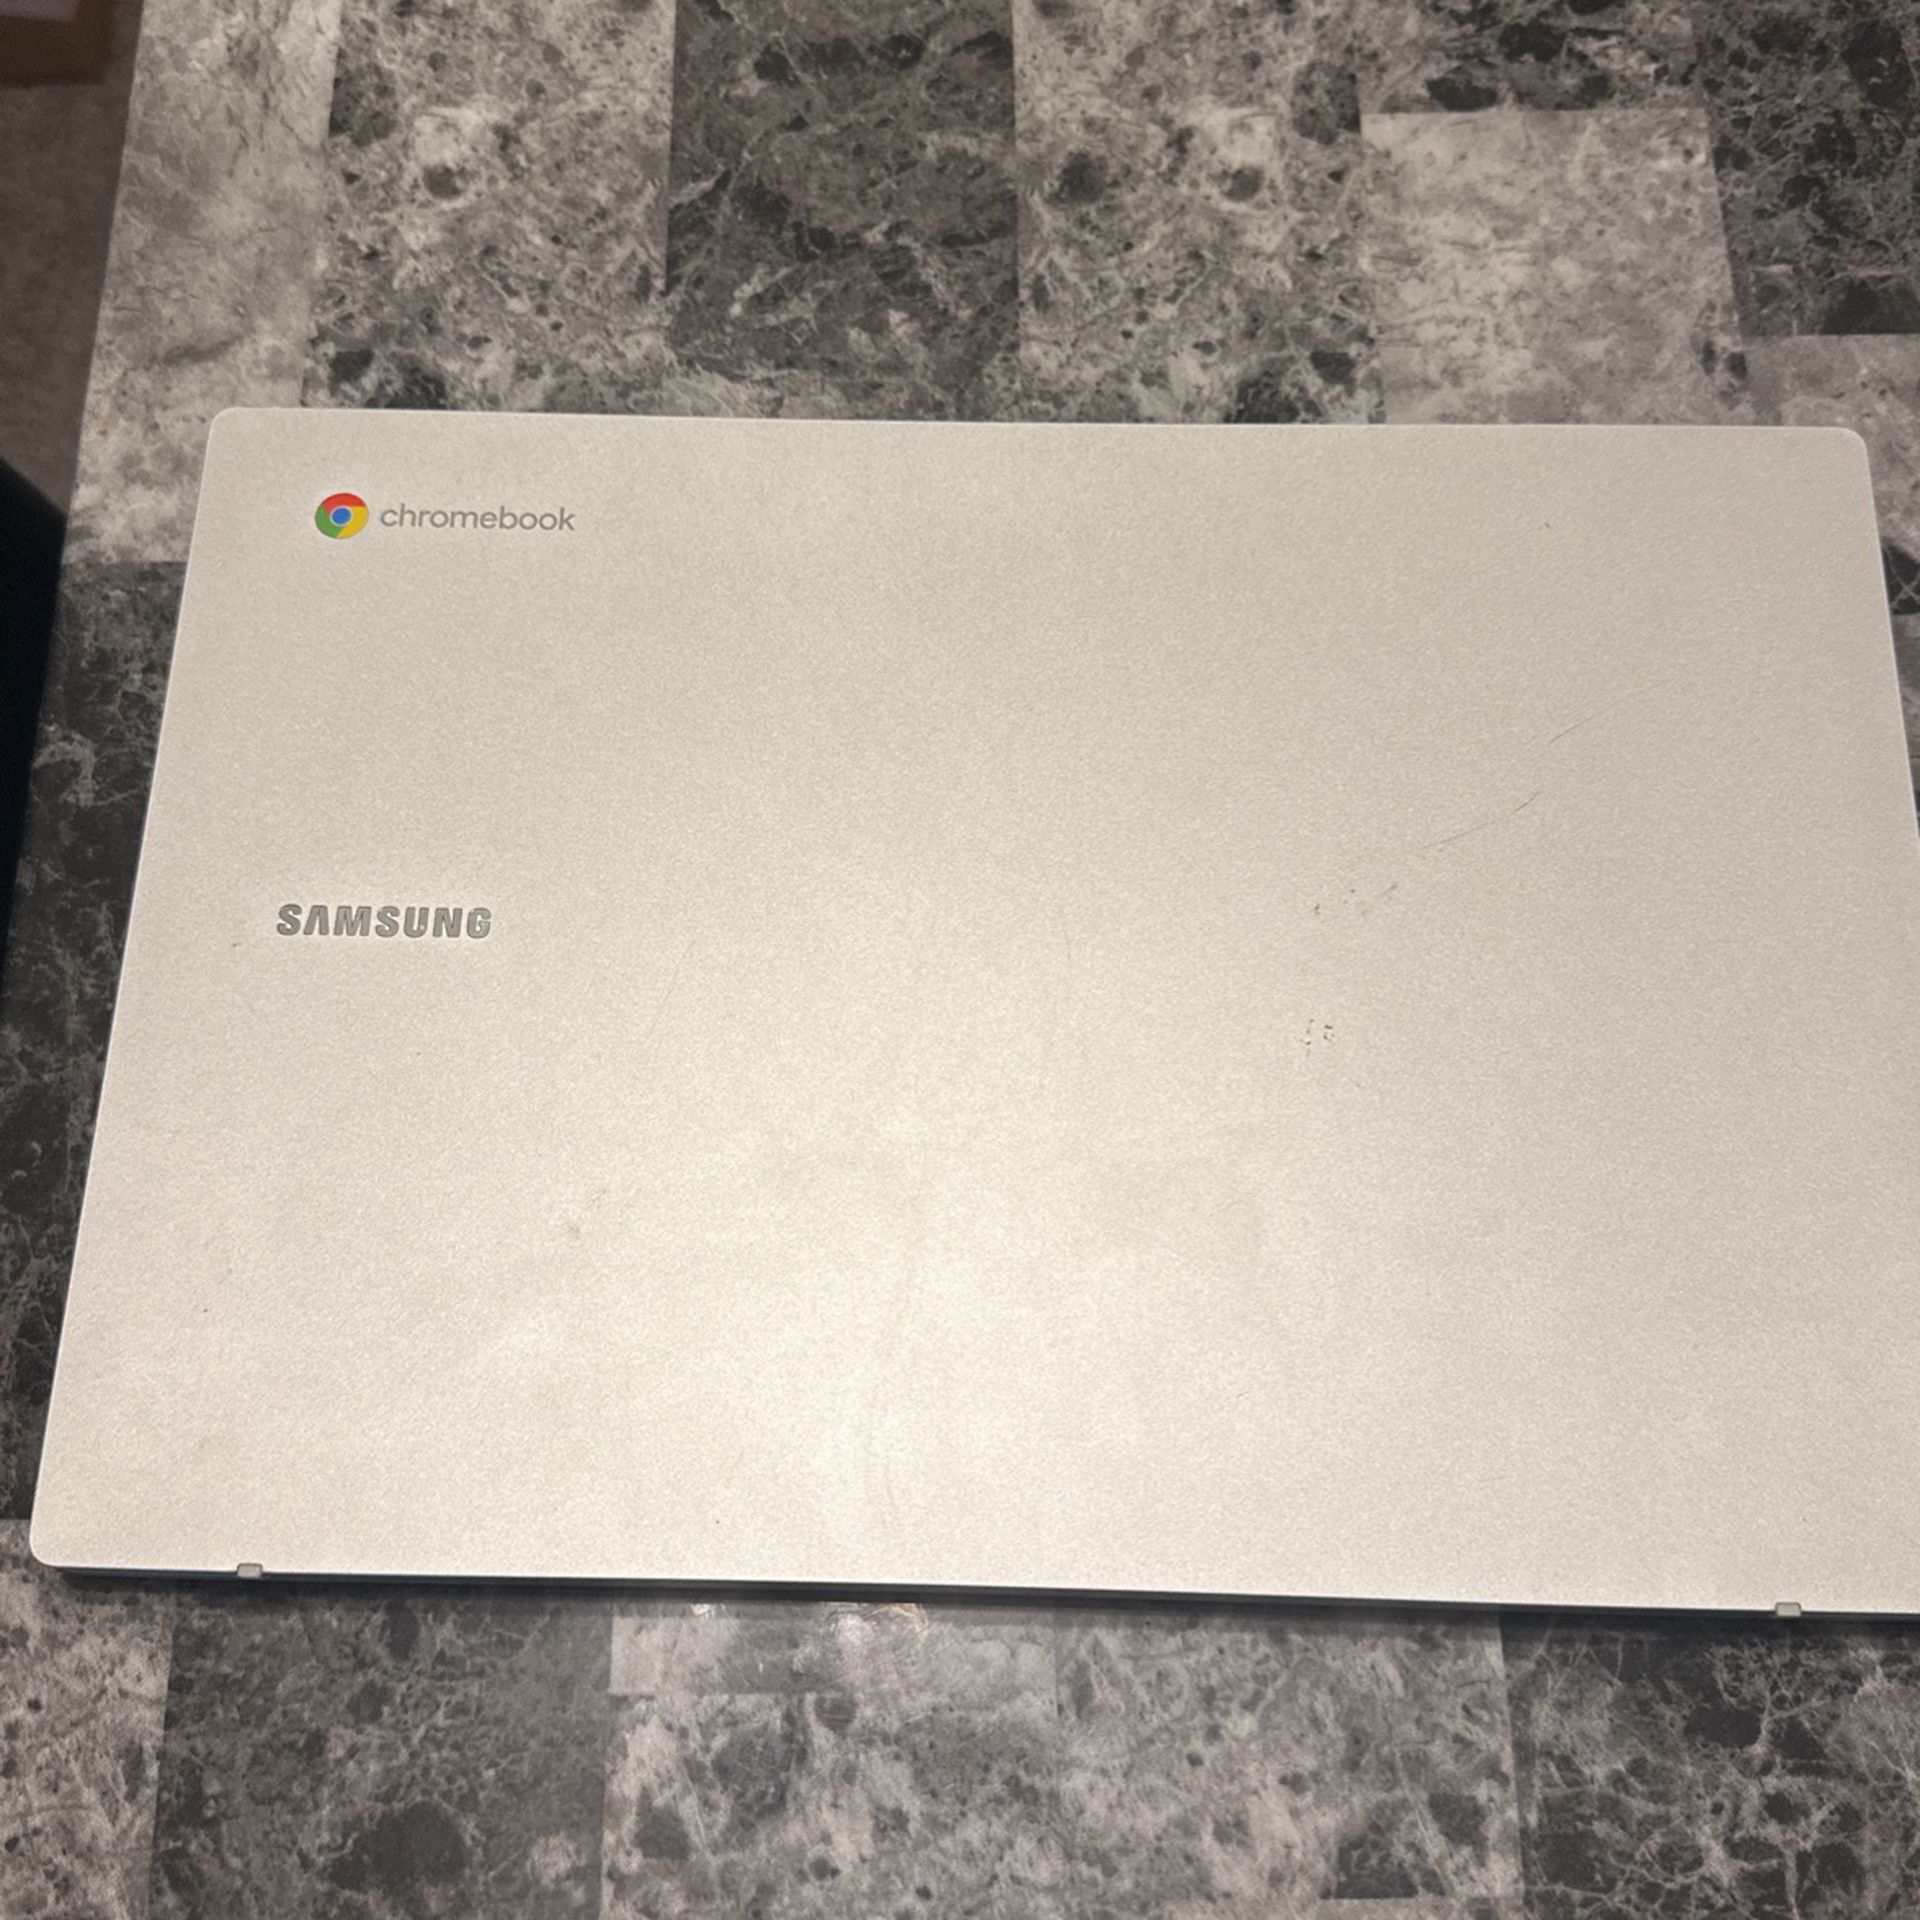 Samson Chromebook, Silver